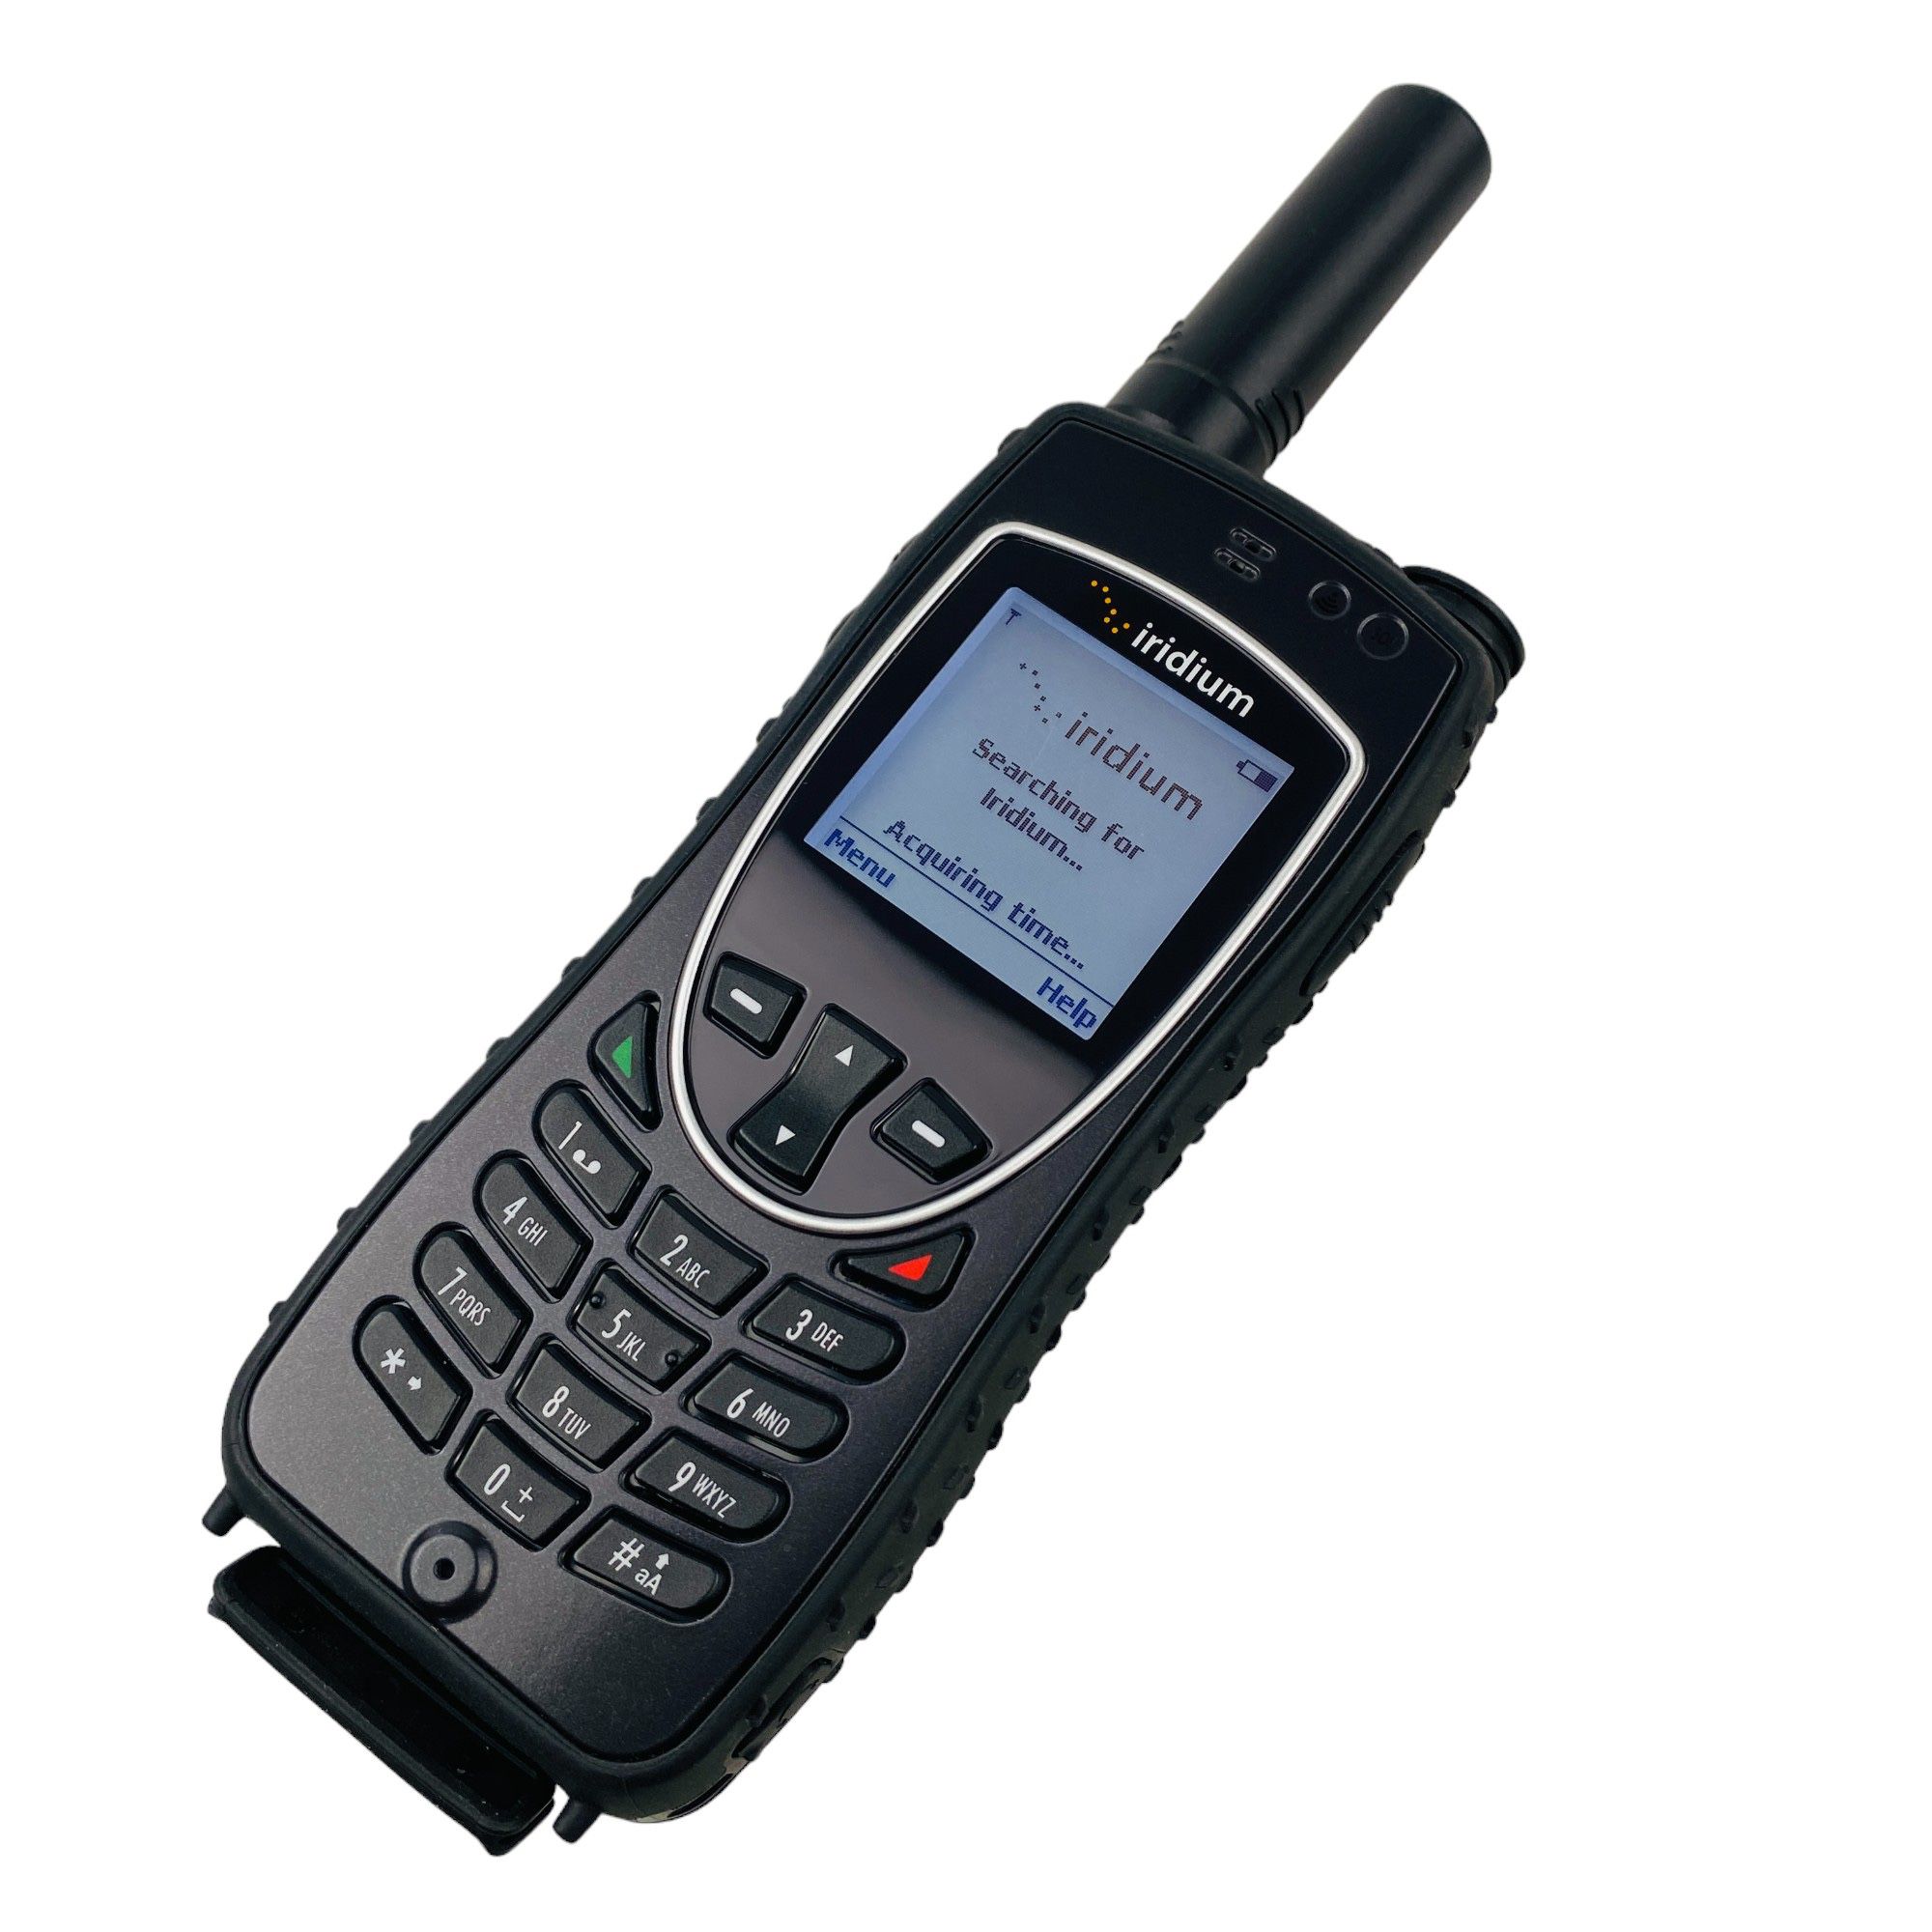 Iridium Extreme 9575 Satellite Phone *No Charger